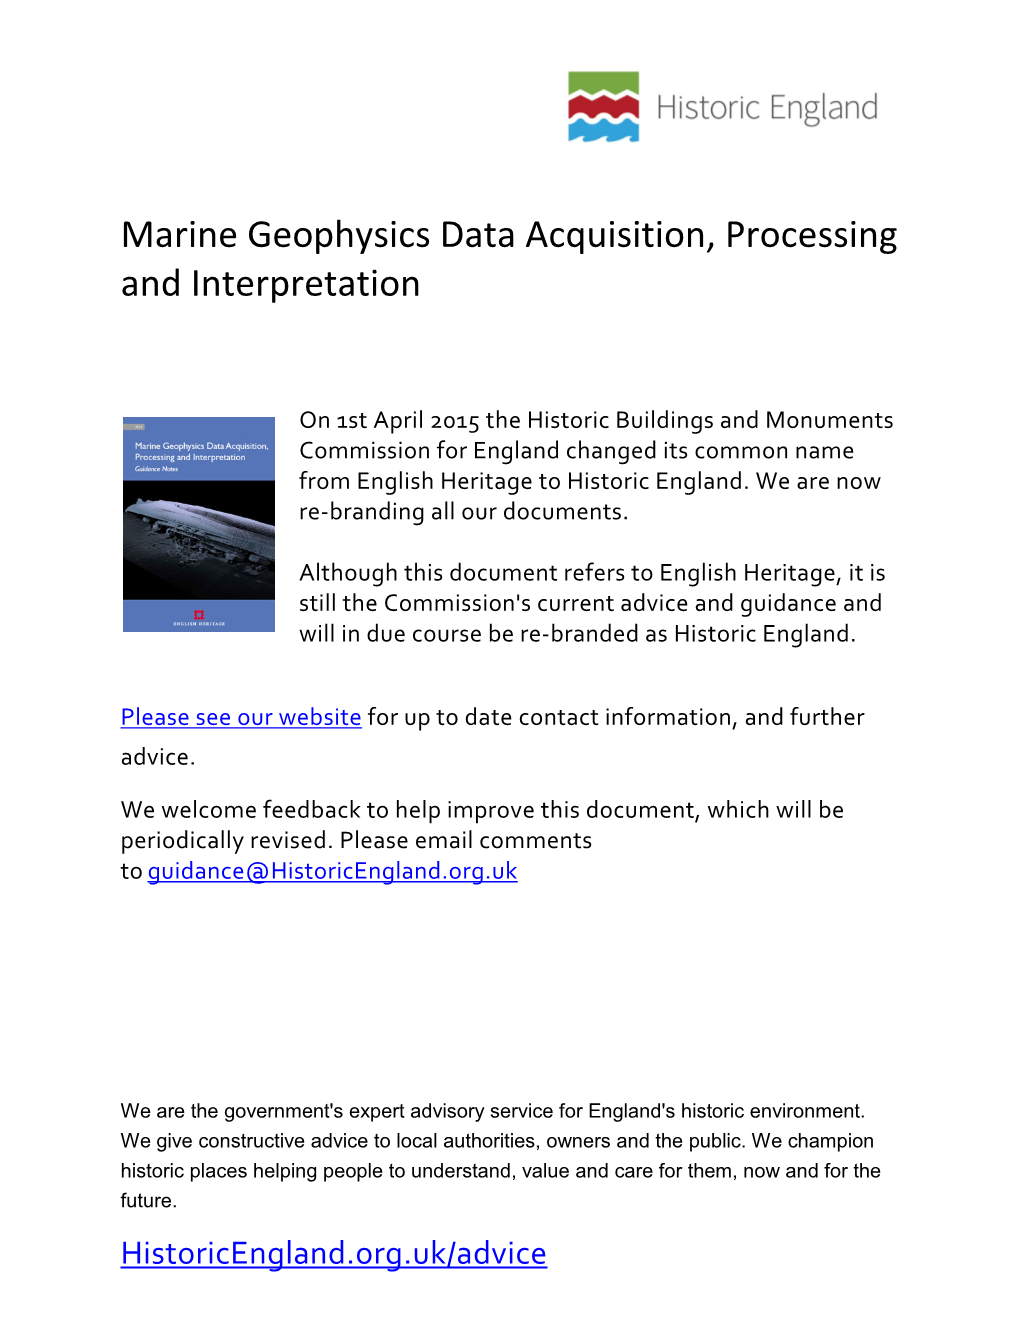 Marine Geophysics Data Acquisition, Processing and Interpretation